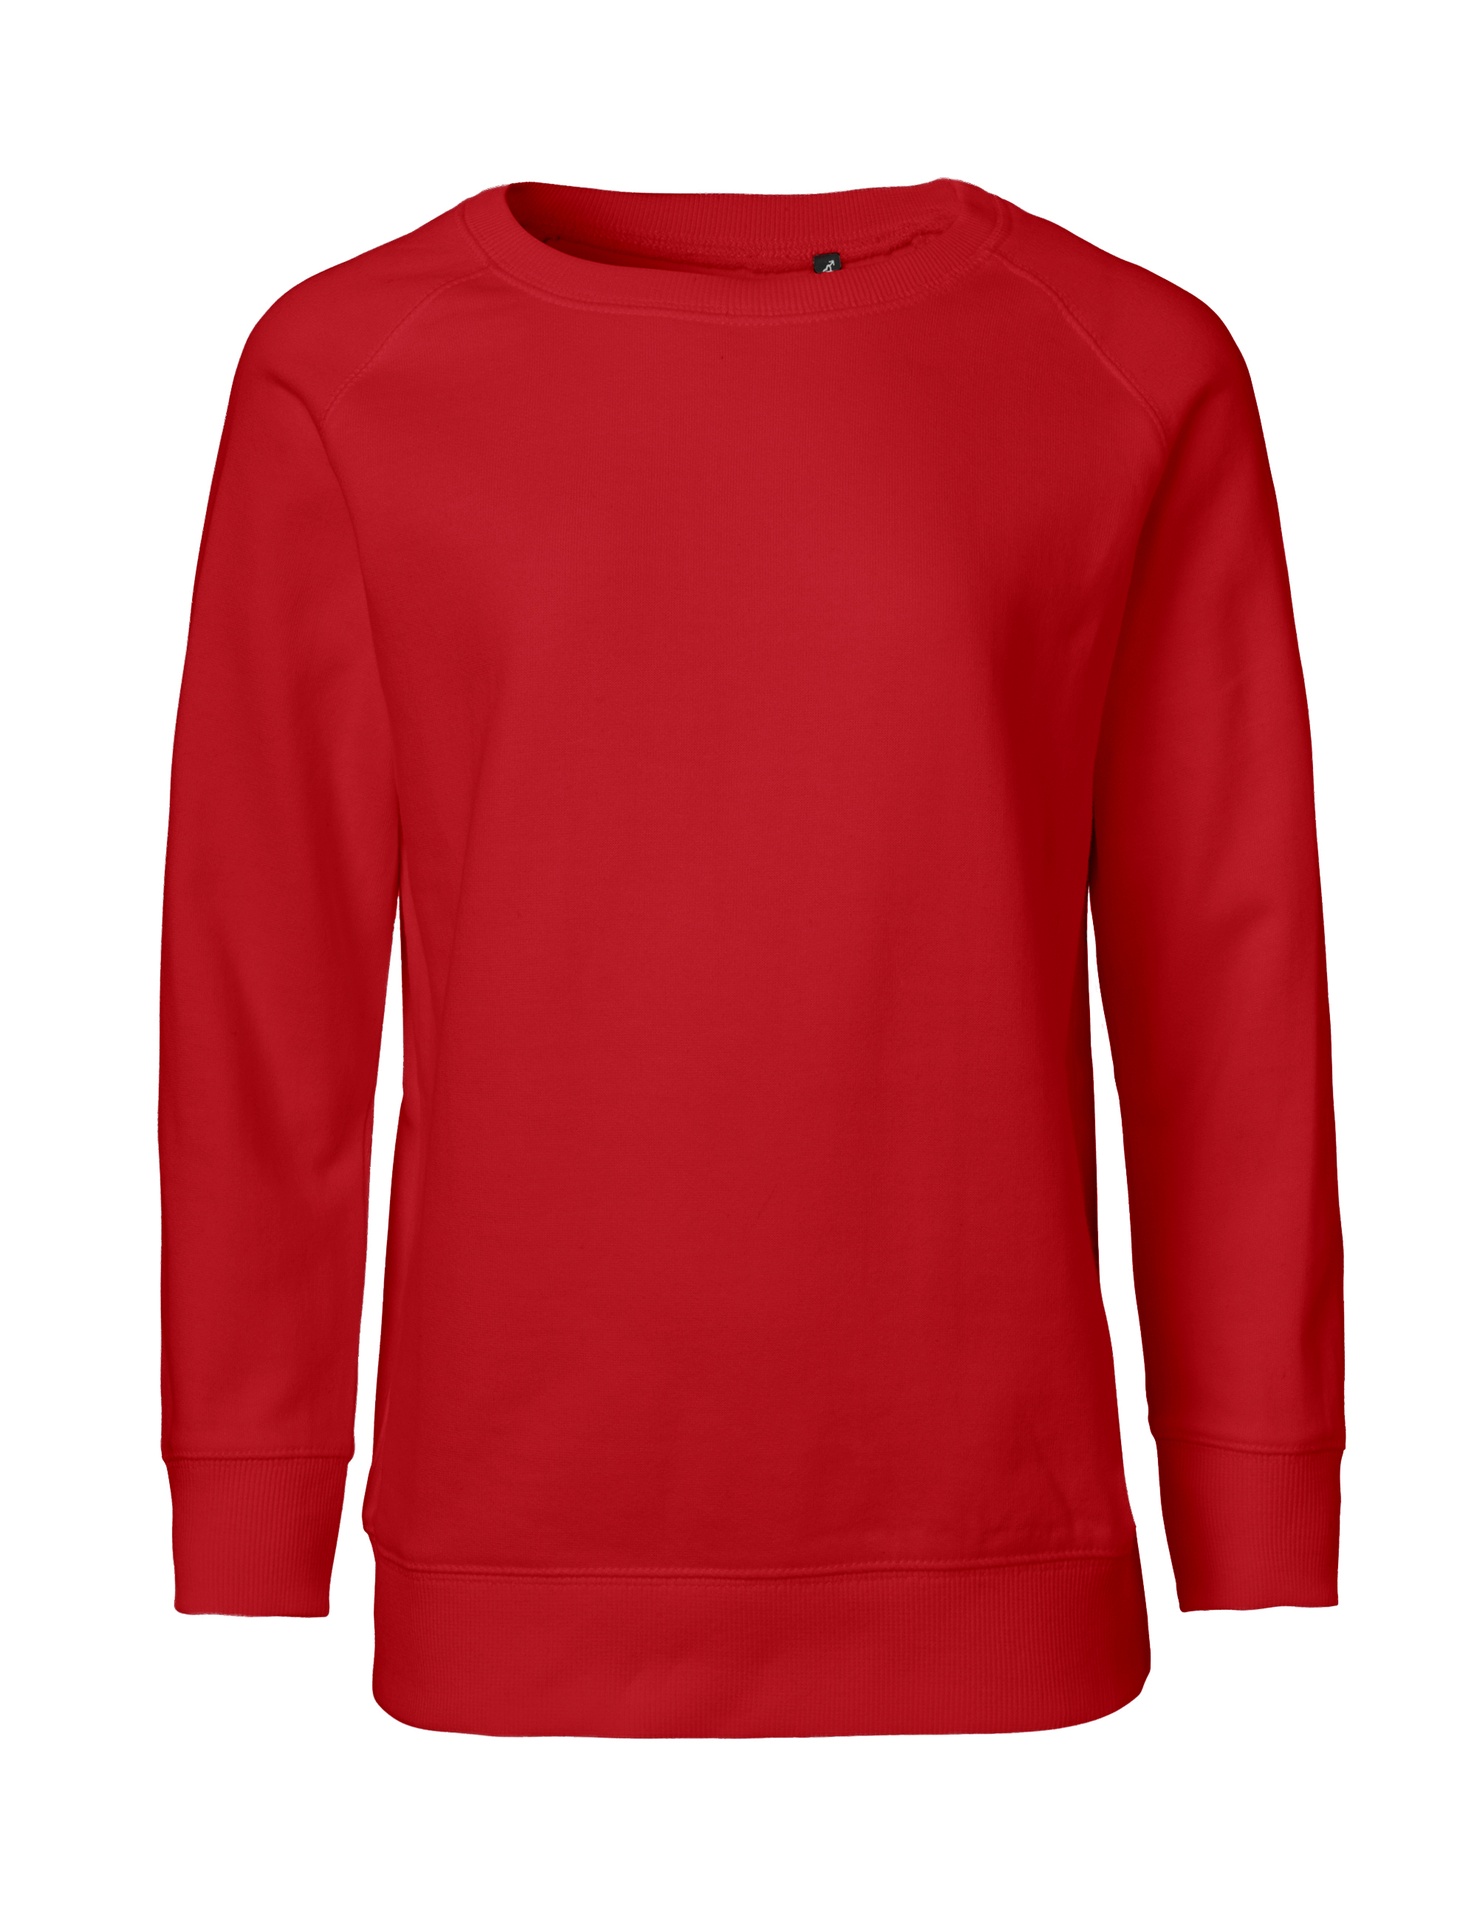 [PR/05536] Kids Sweatshirt (Red 05, 116/122 cm)